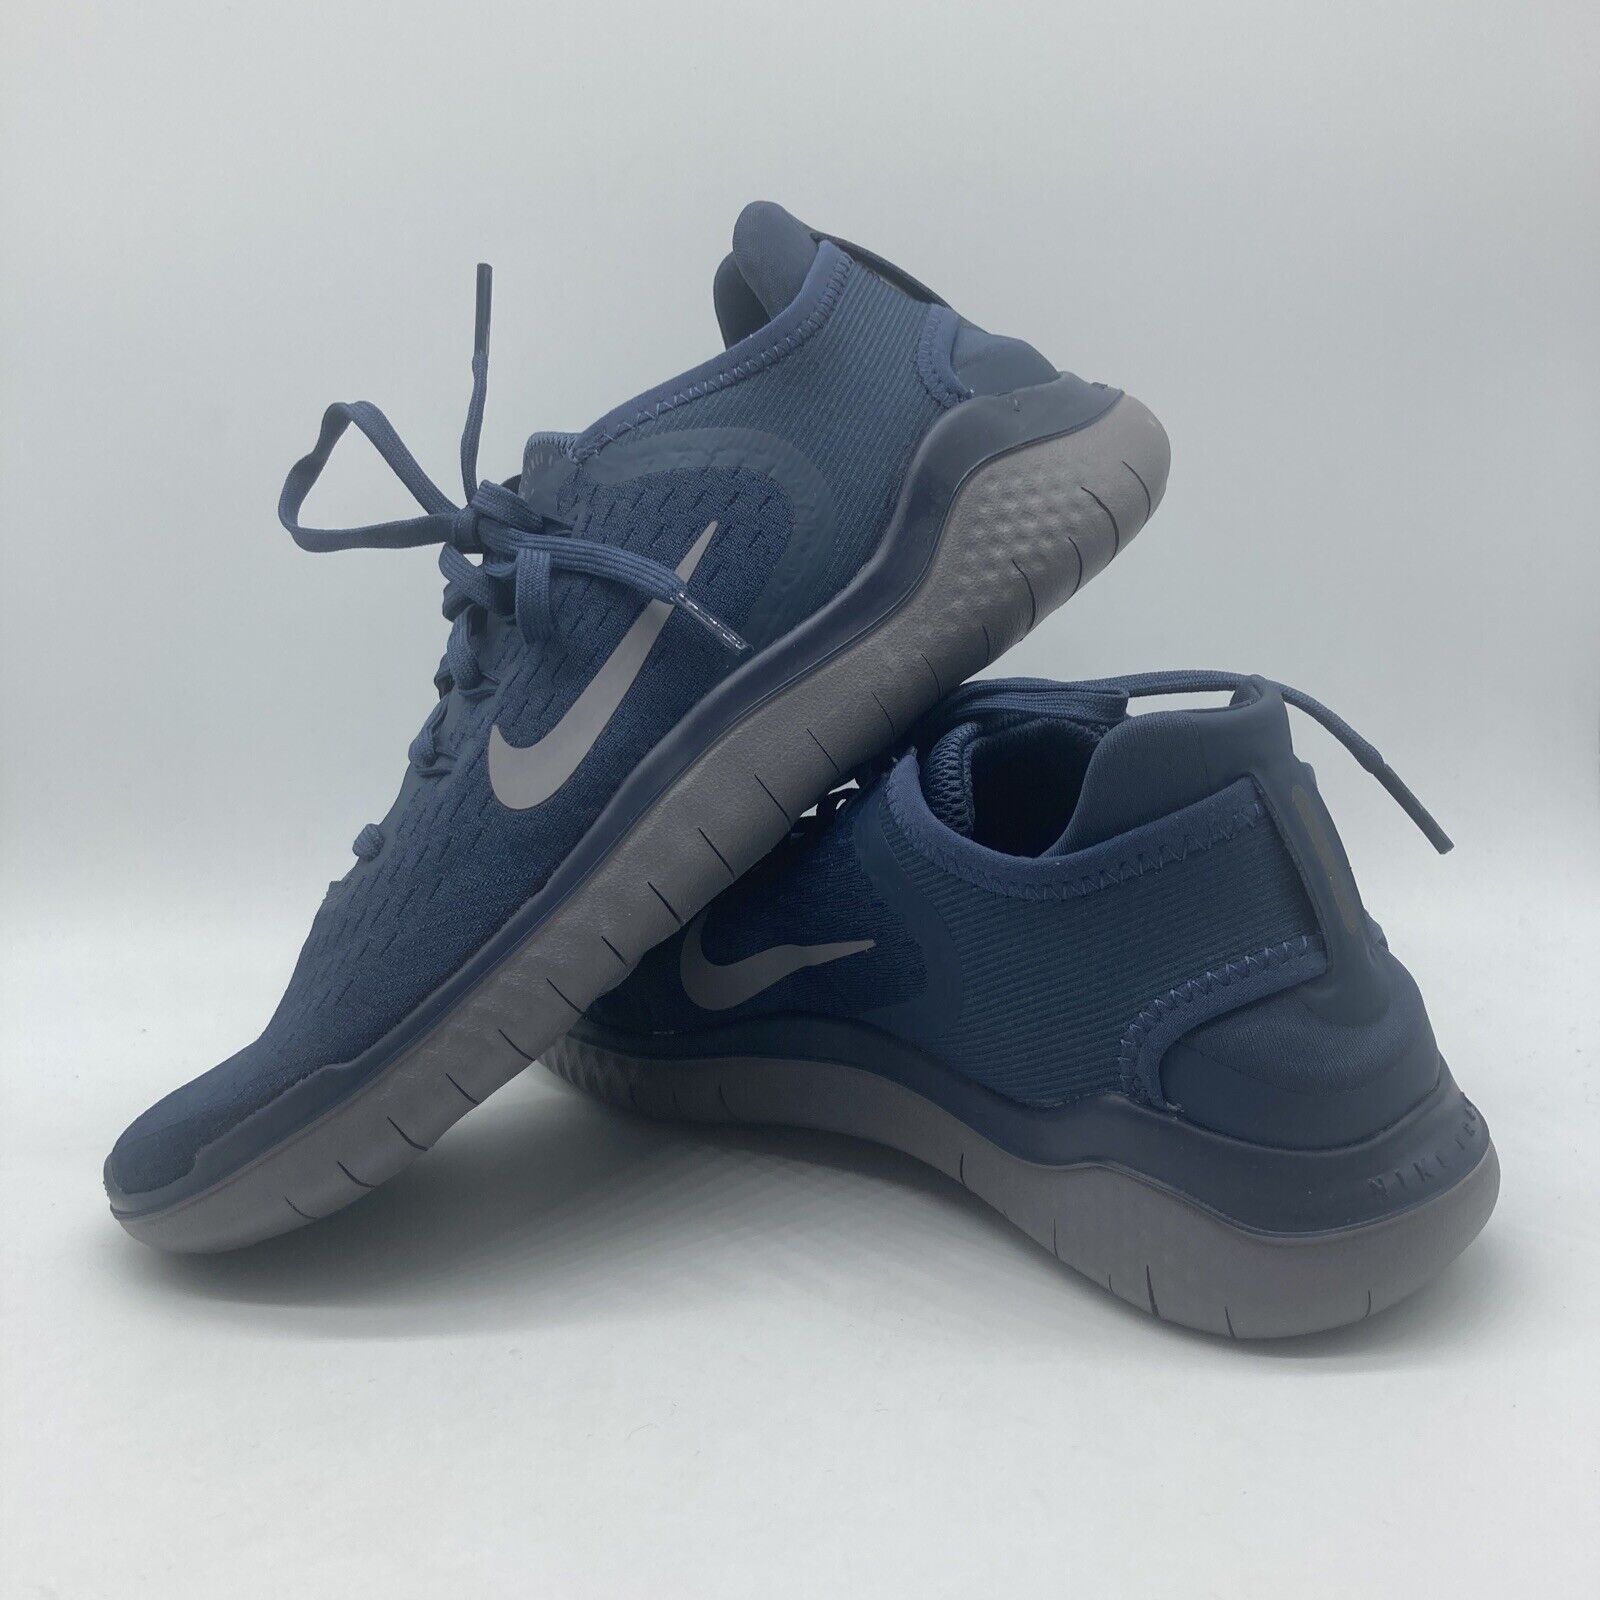 wapenkamer Verwoesten Vul in Nike Free Run 2018 Running Shoes Blue Grey Shoes 942836-401 Mens Sizes NEW  | eBay